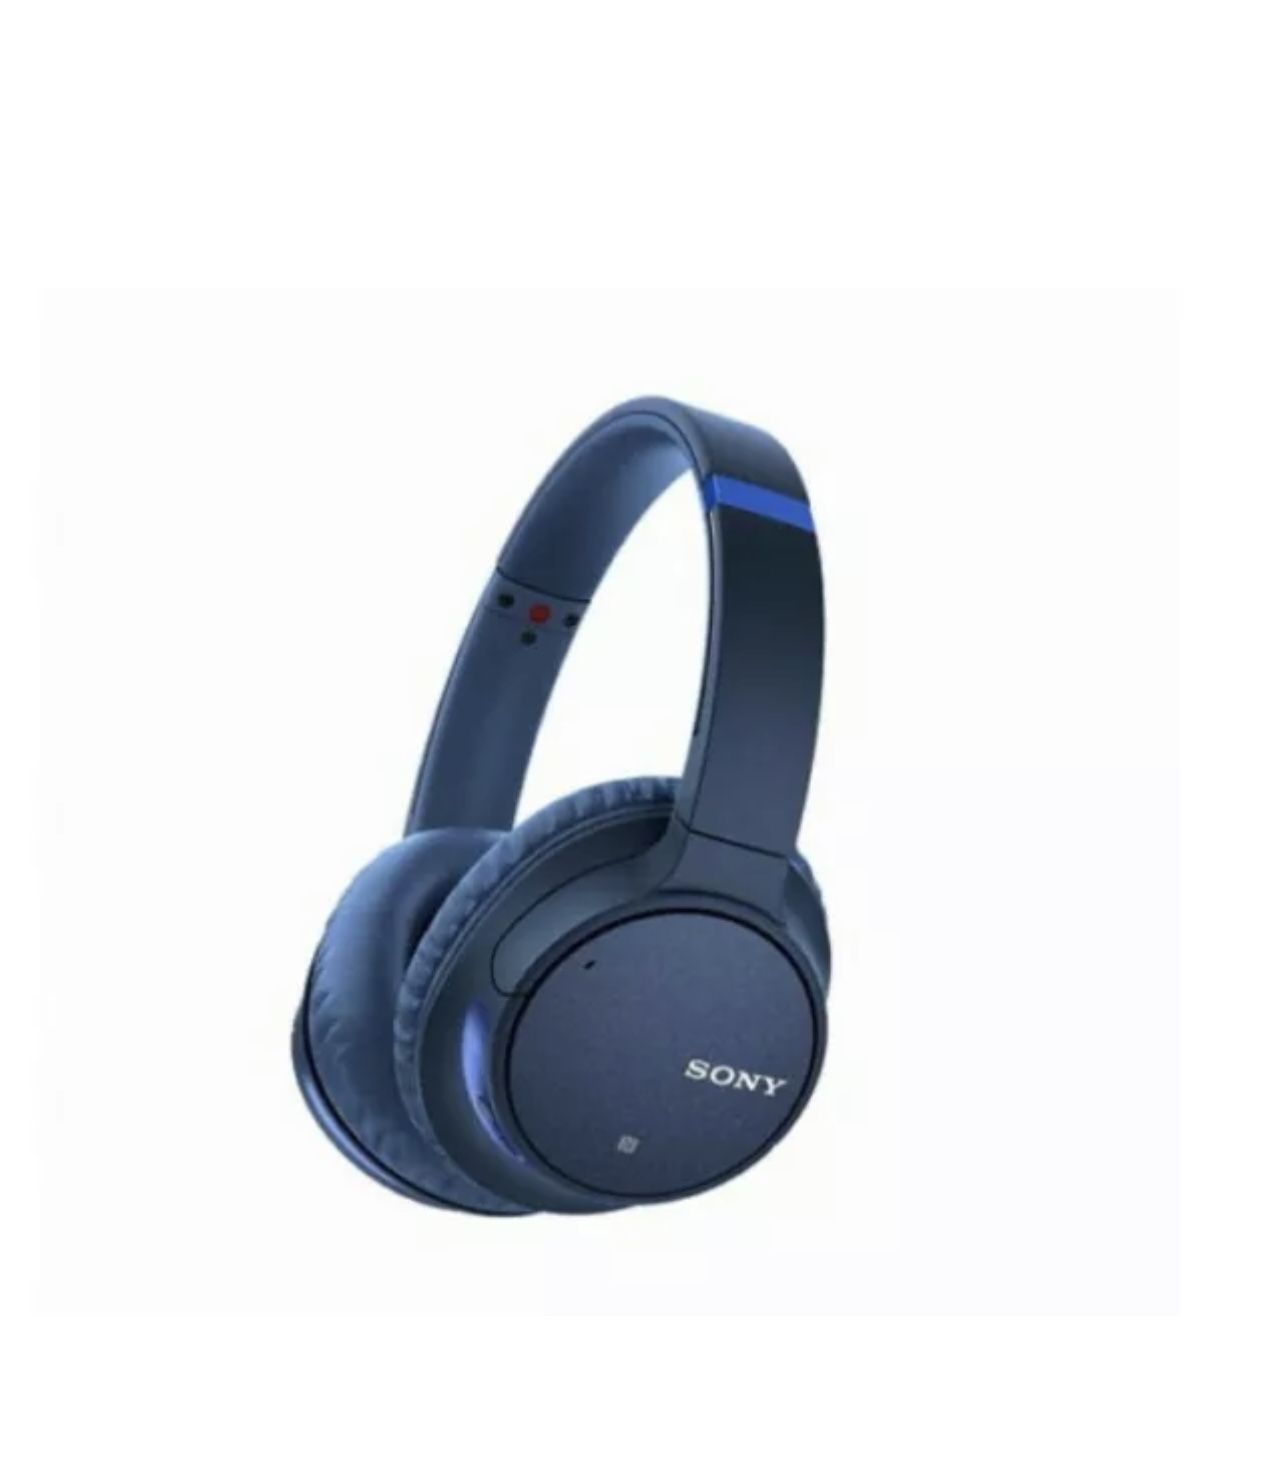 Sony wh-ch700n Headphones